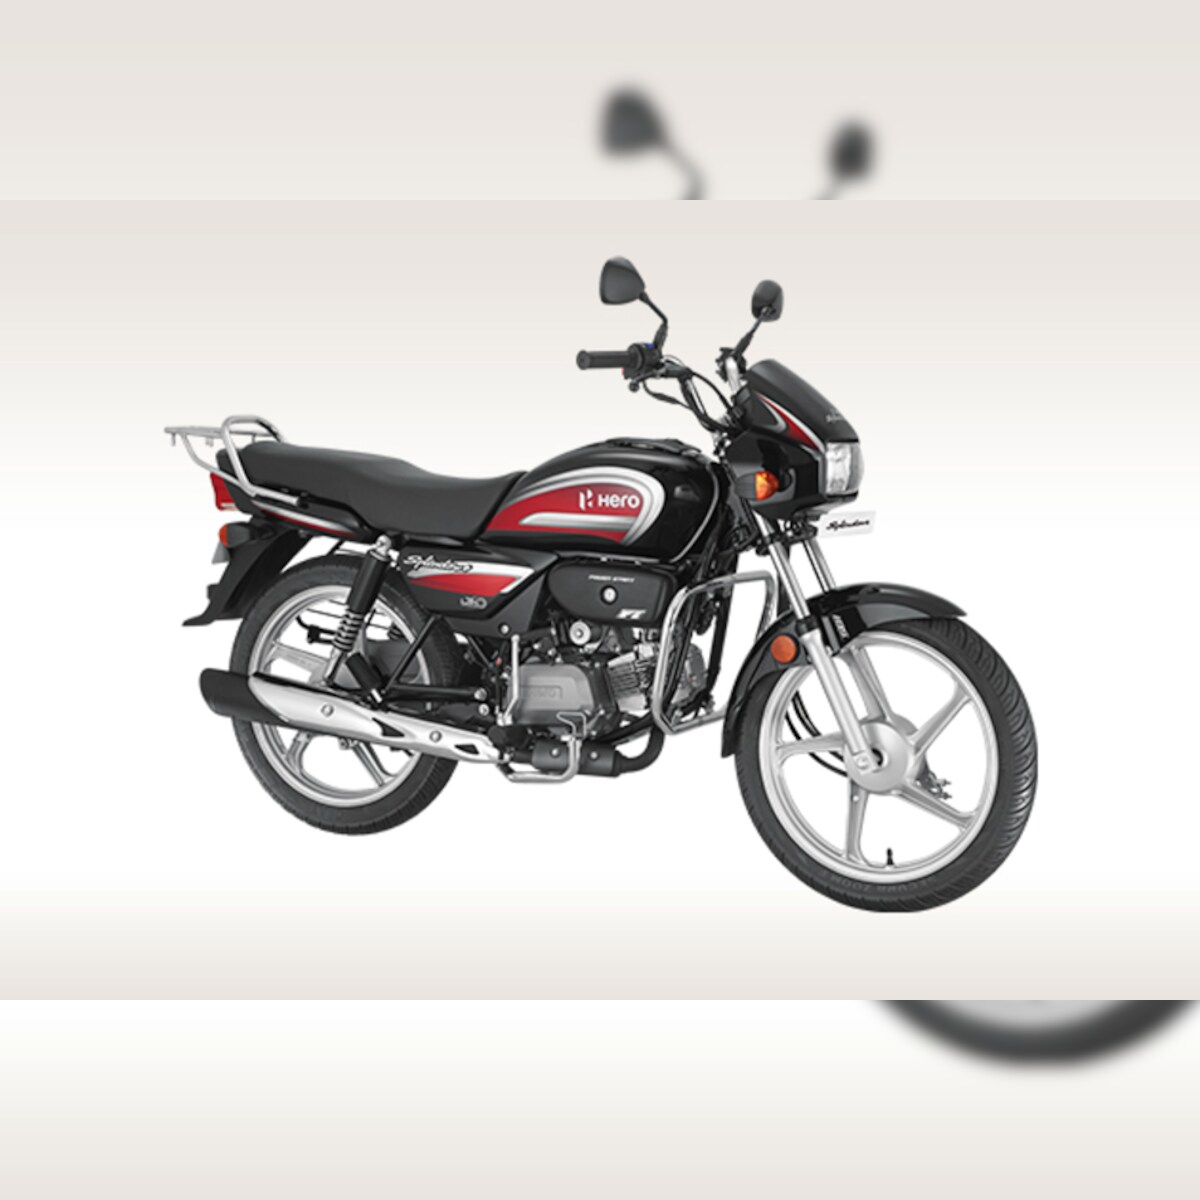 Top 5 Fuel Efficient Motorcycles To Buy In India Bajaj Platina 110 Honda Cd 110 Deluxe And More